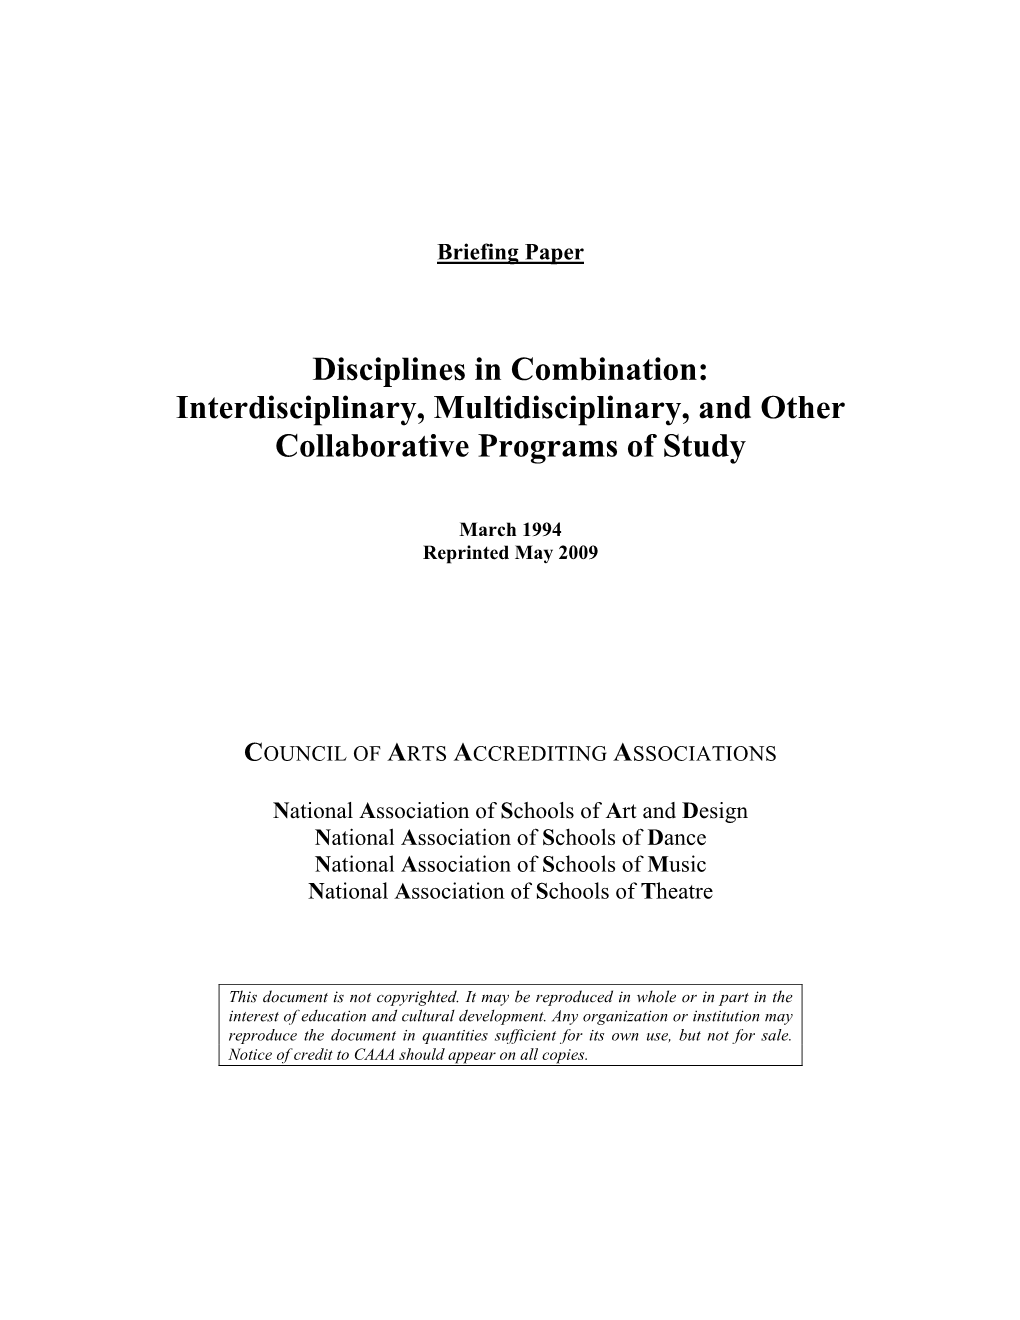 Disciplines in Combination: Interdisciplinary, Multidisciplinary, and Other Collaborative Programs of Study